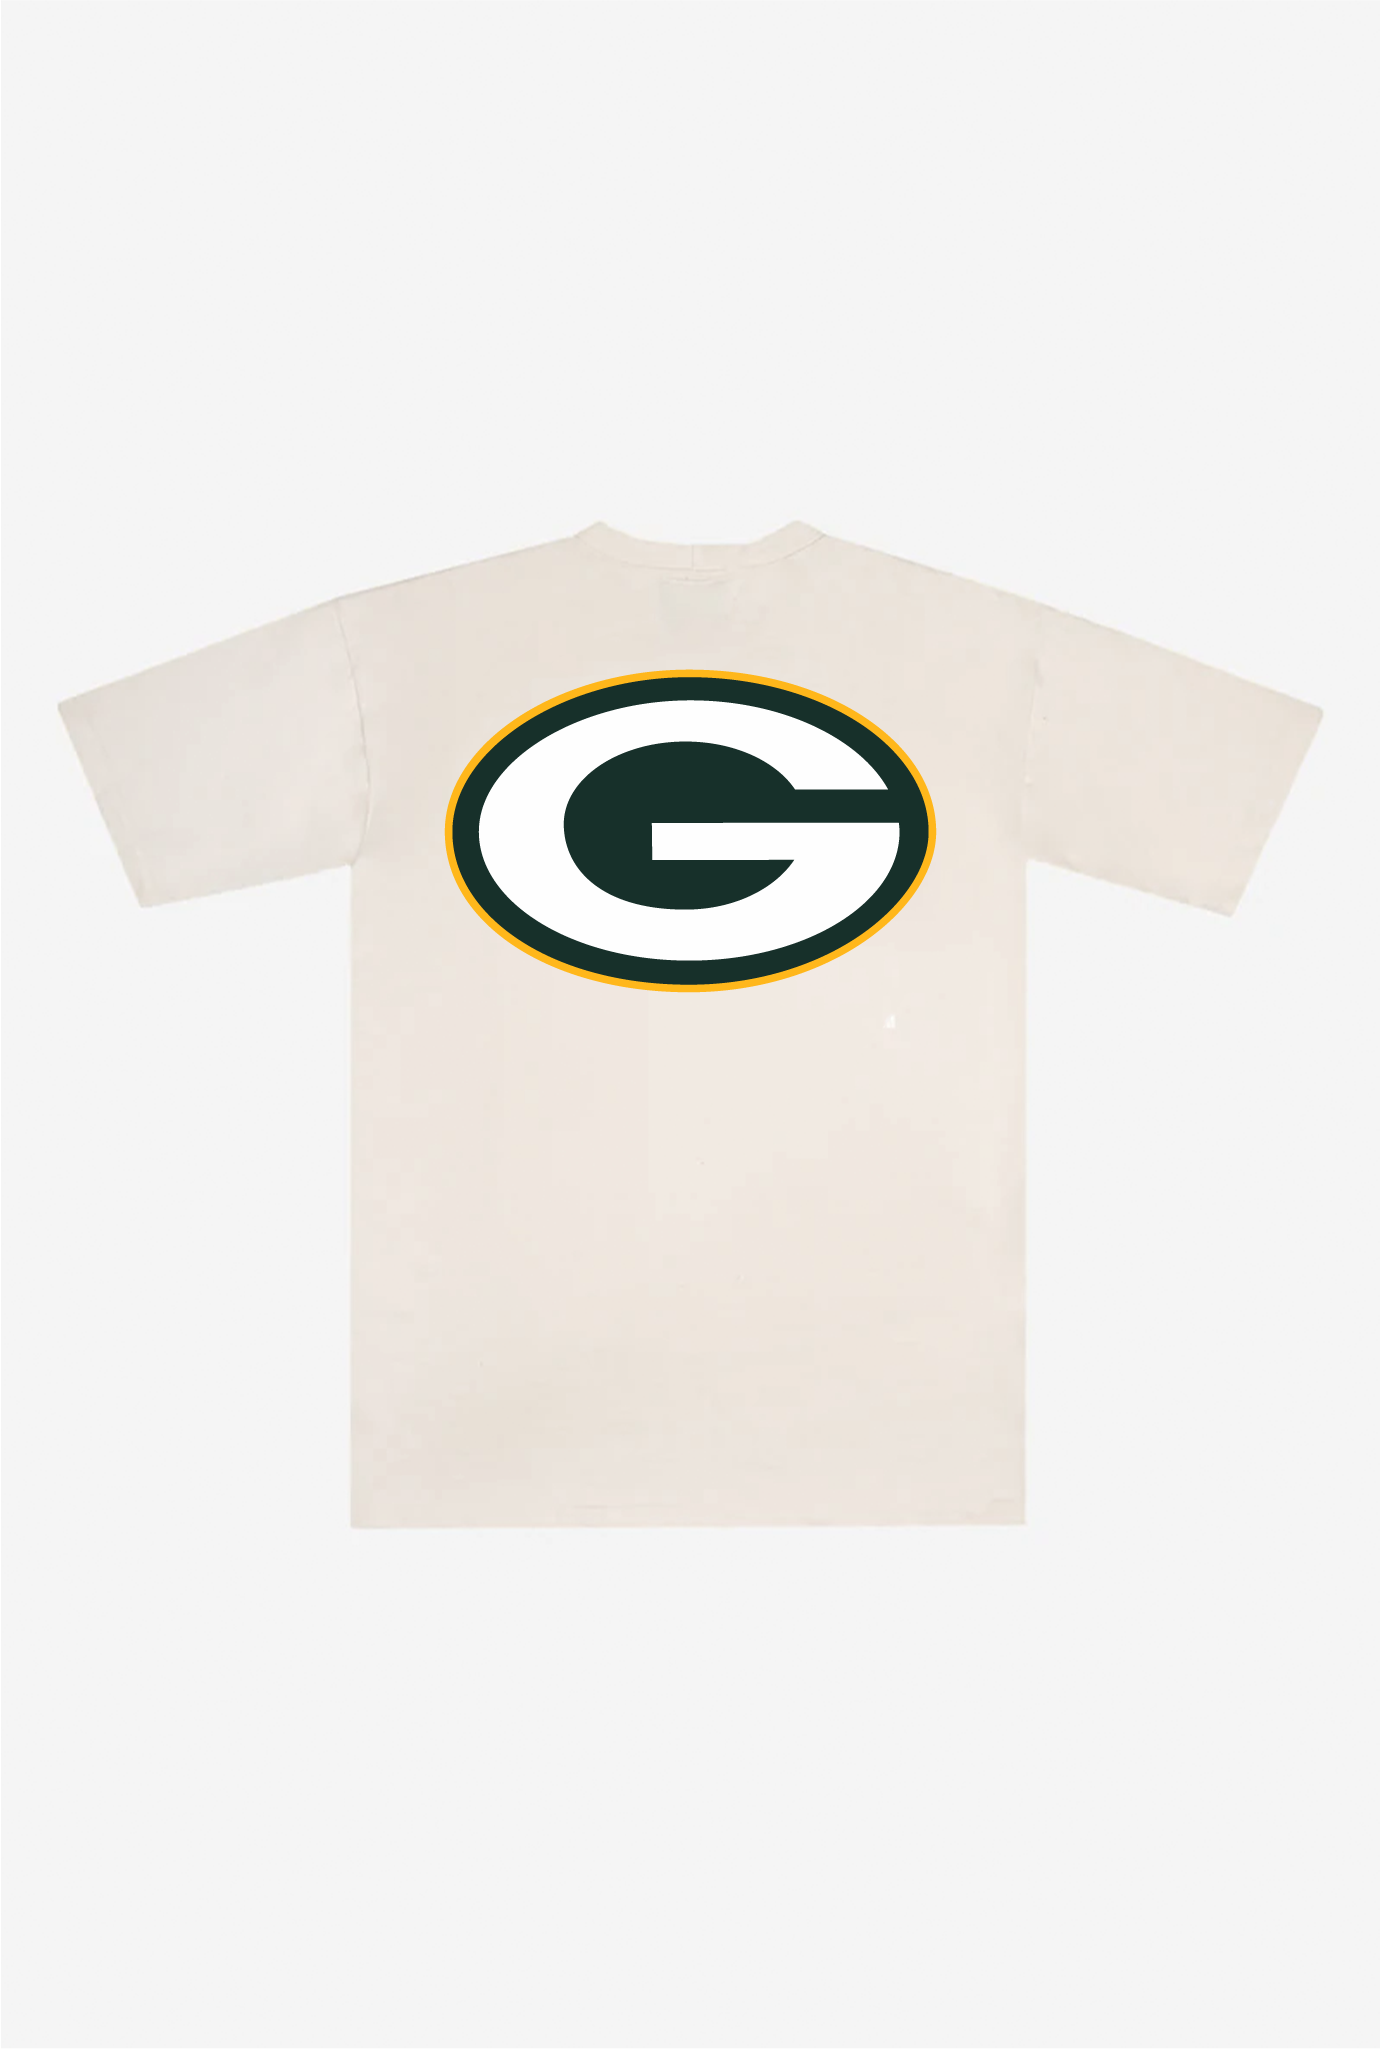 Green Bay Packers Heavyweight T-Shirt - Natural